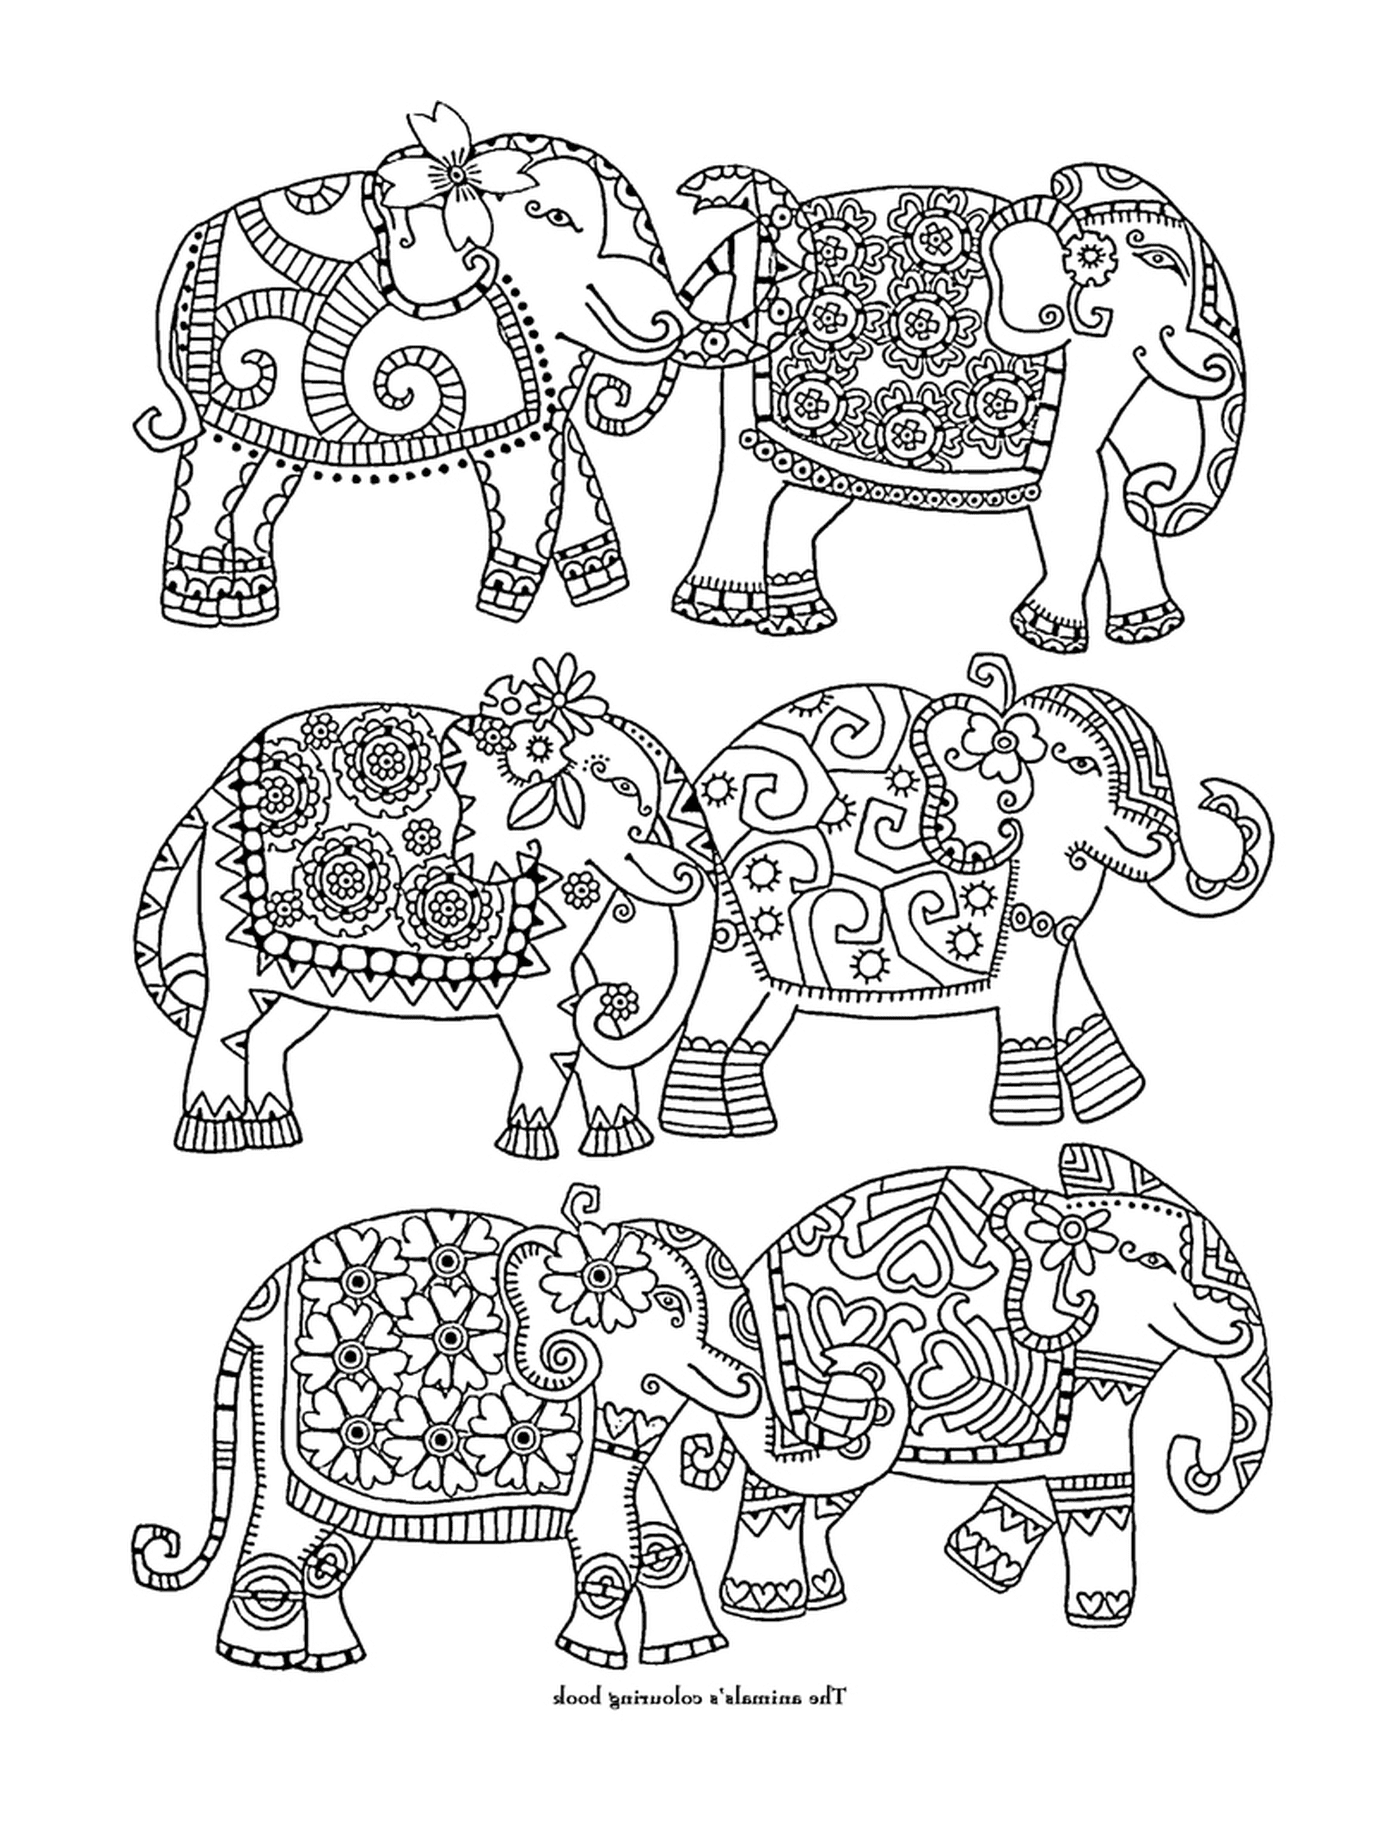  Un conjunto de seis elefantes diferentes 